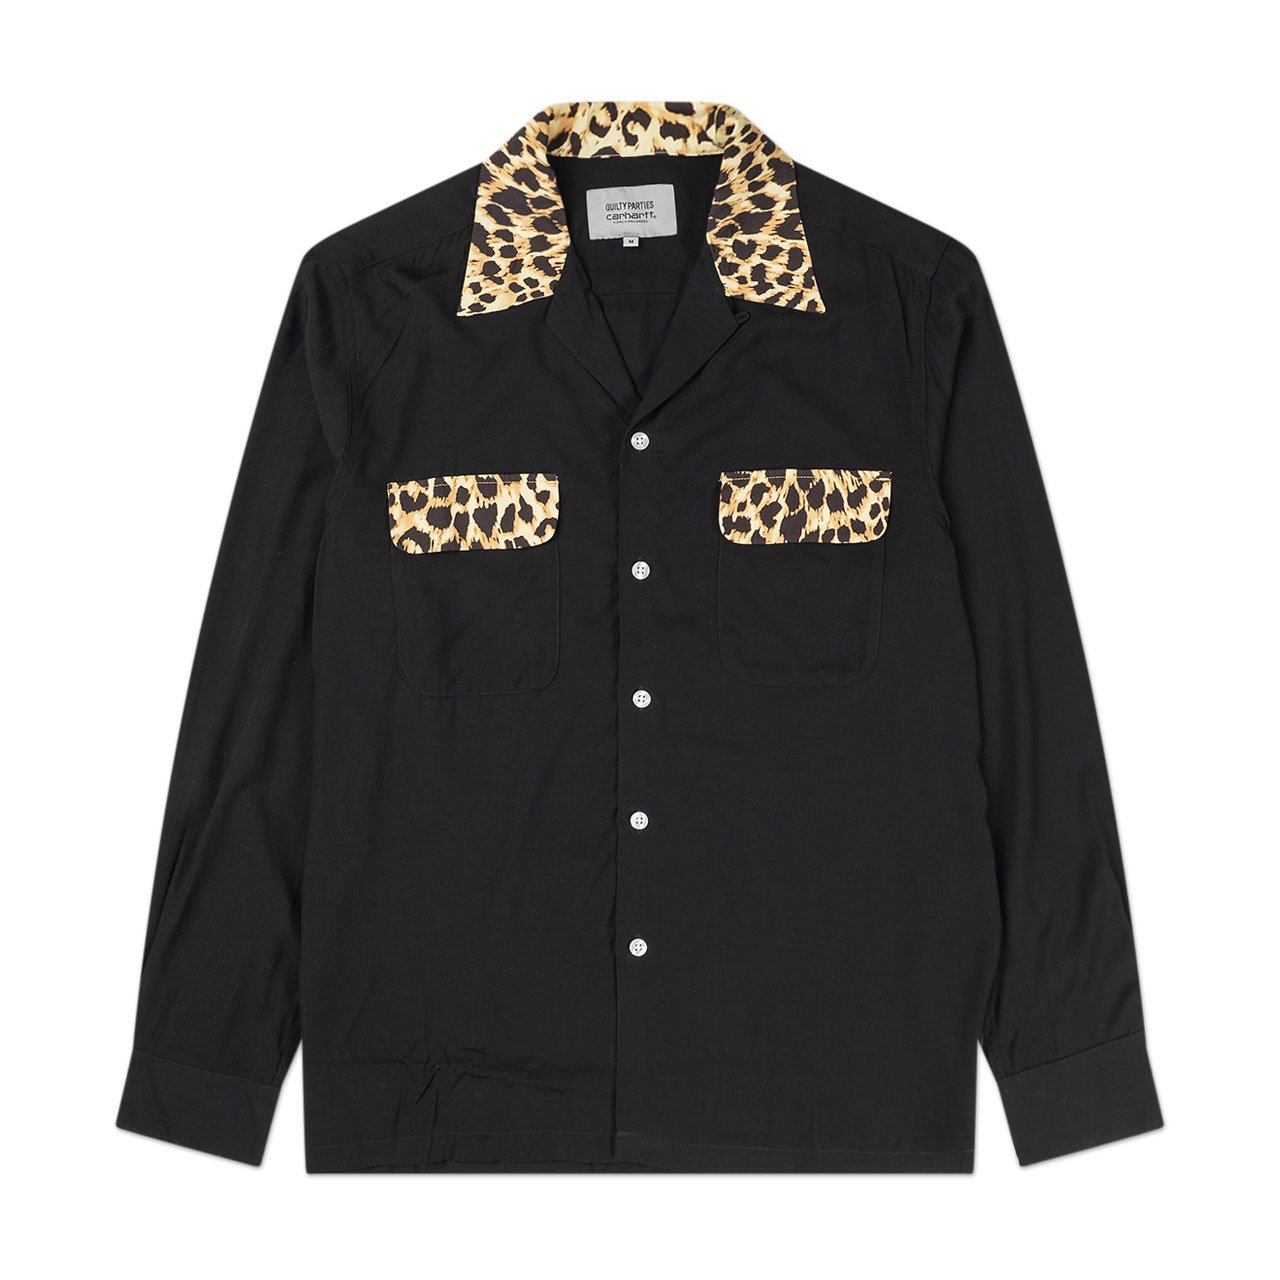 carhartt wip x wacko maria 50's shirt (black / leopard print) - i028240.0d6.90.03 - a.plus - Image - 1